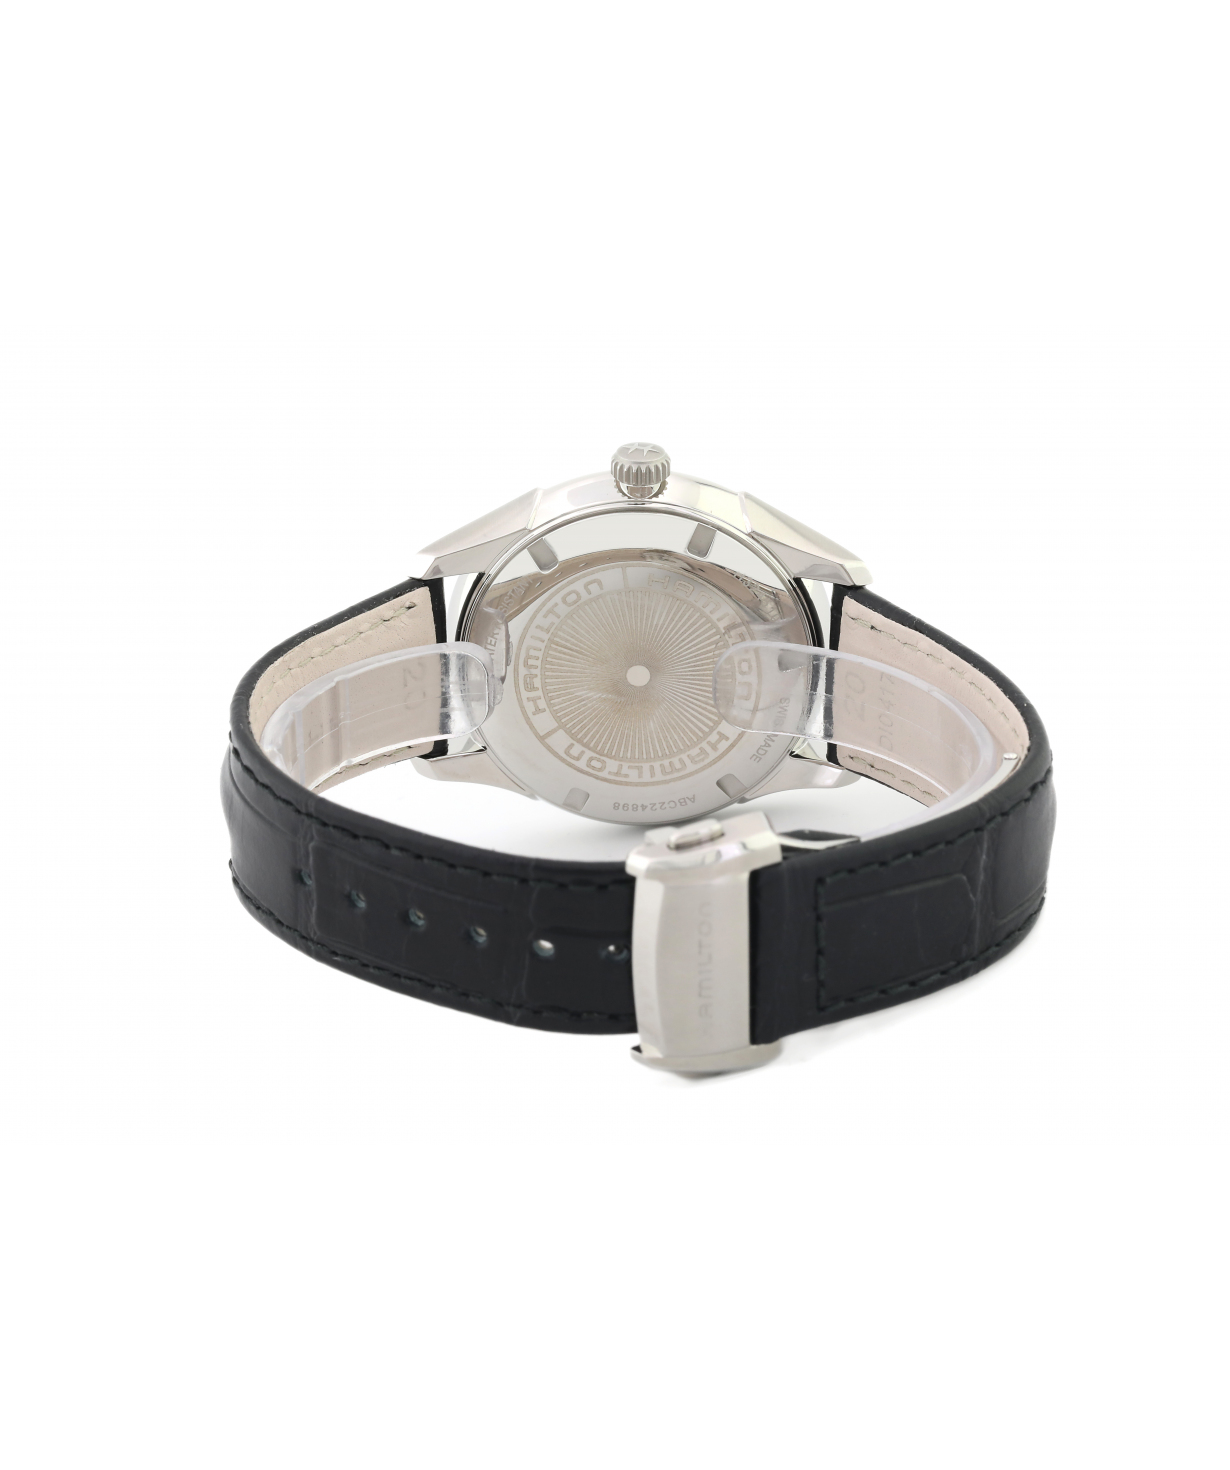 Wristwatch `Hamilton`  /H32451731